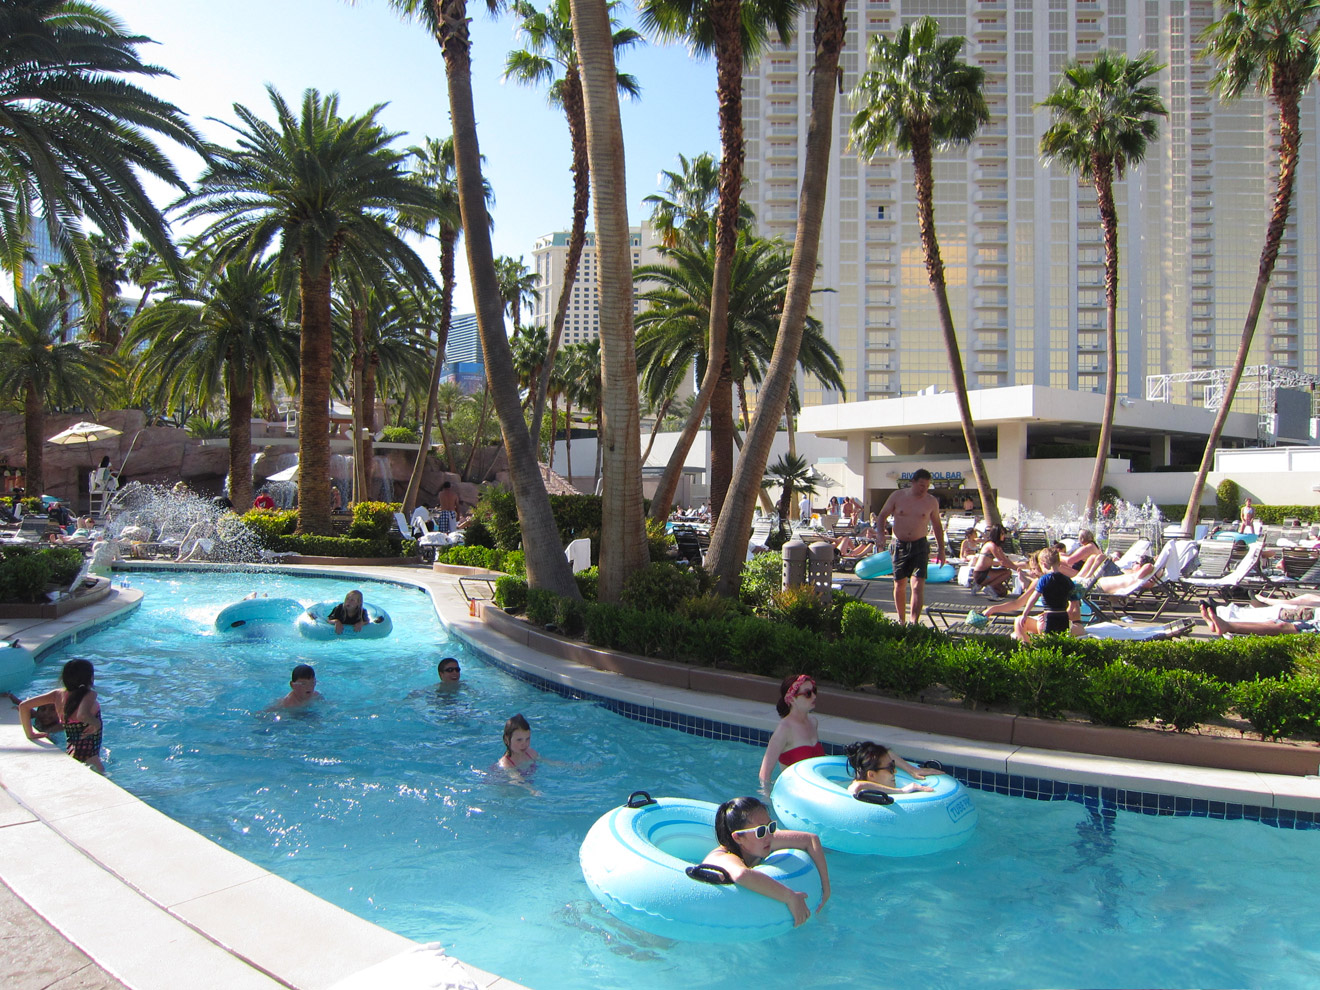 Kid-Friendly Hotels in Las Vegas & Hotels in Vegas for Families